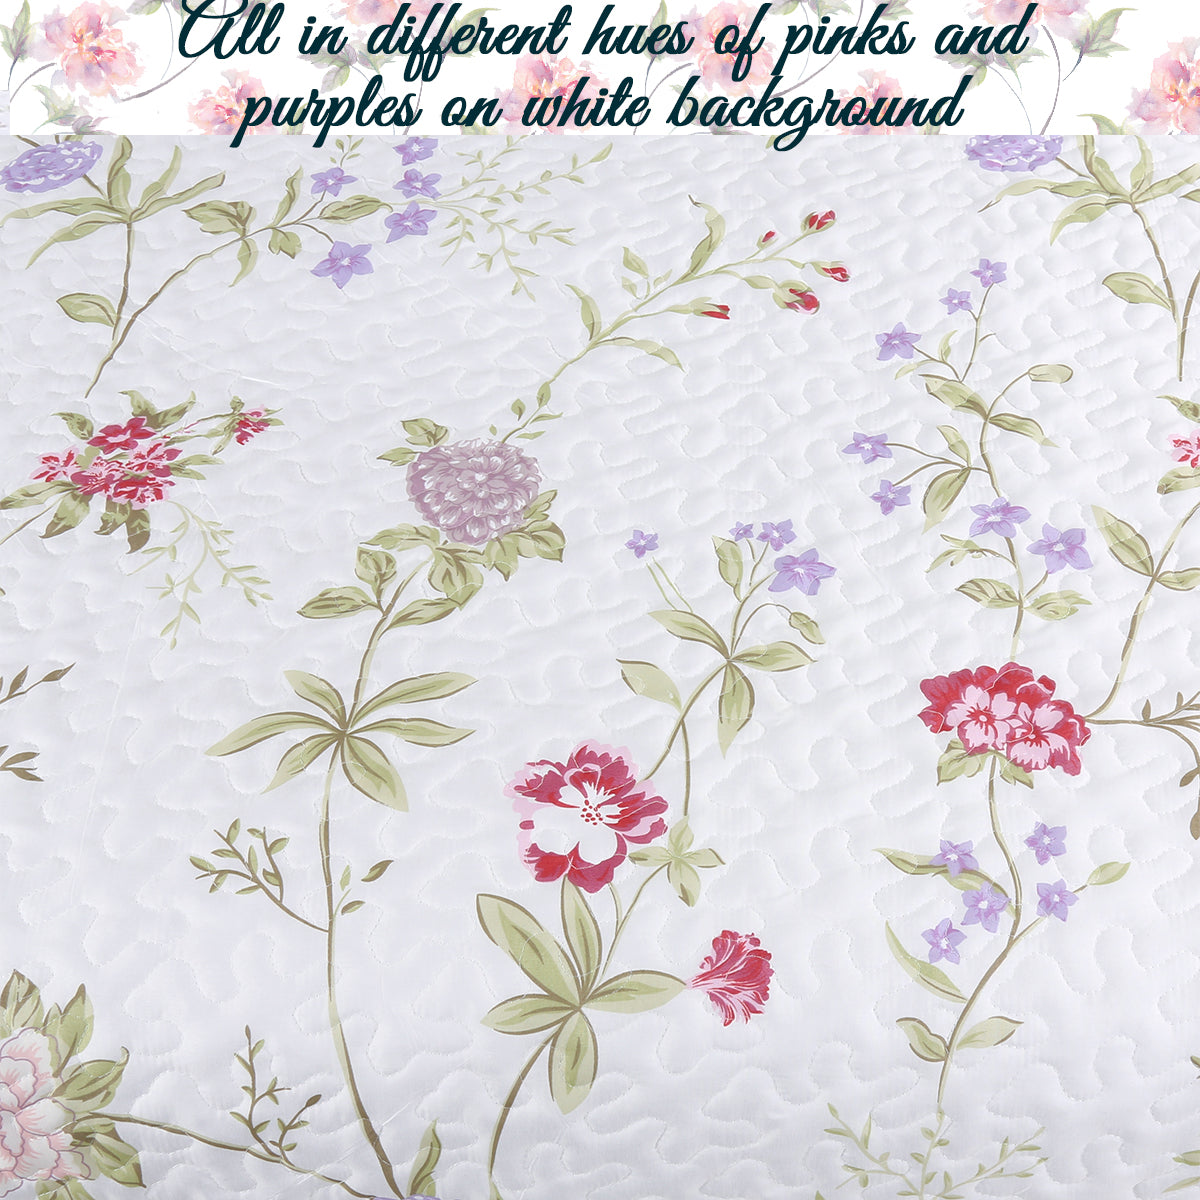 Lucie Light Pink Lavender Floral 3-Piece Reversible Quilt Bedding Set